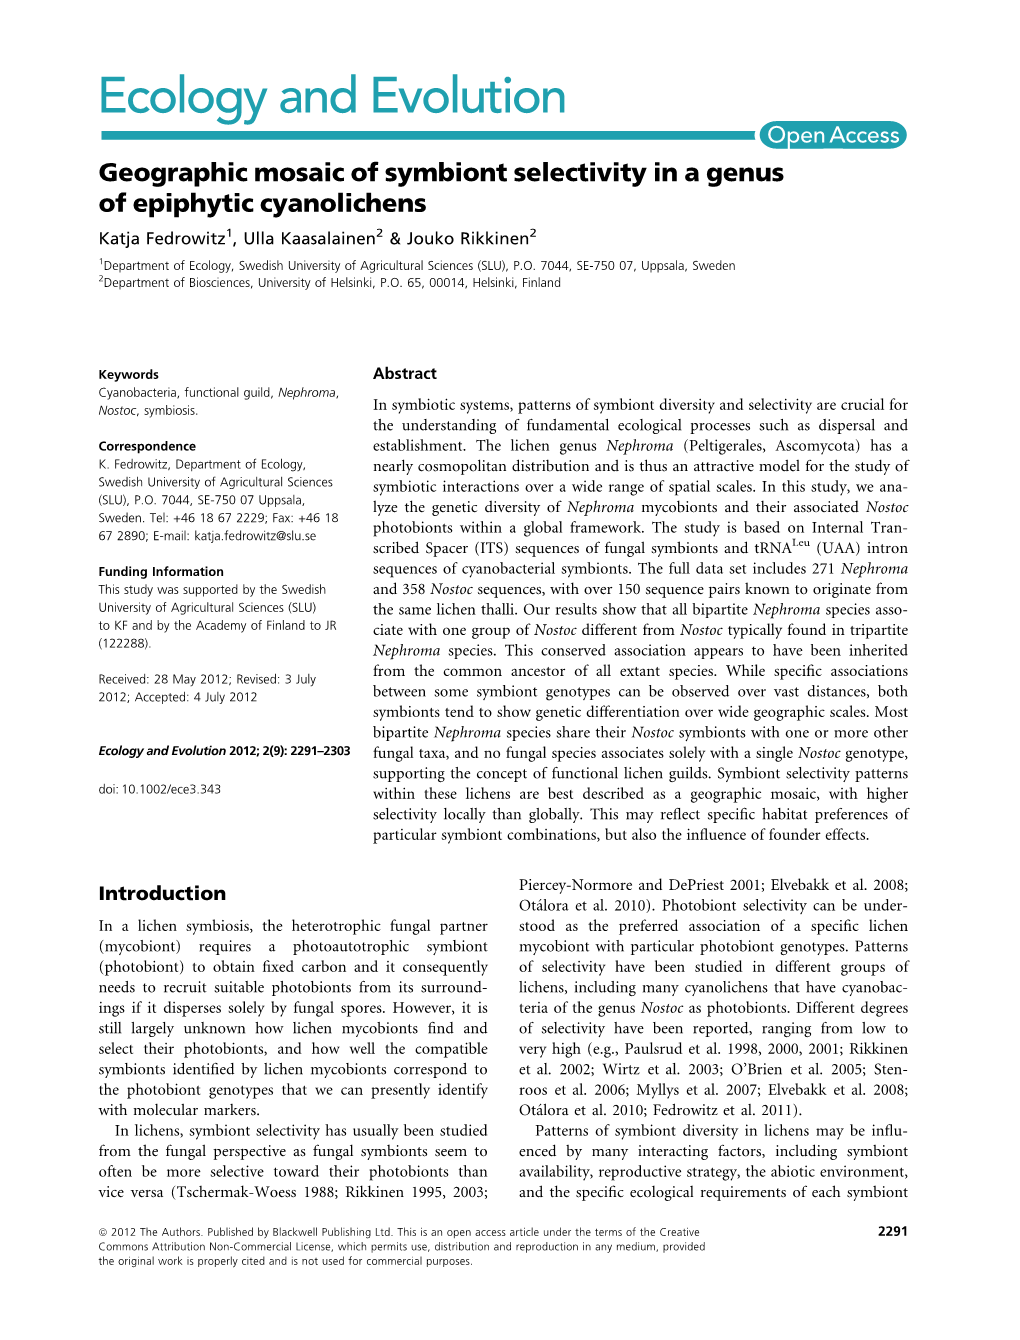 Geographic Mosaic of Symbiont Selectivity in a Genus of Epiphytic Cyanolichens Katja Fedrowitz1, Ulla Kaasalainen2 & Jouko Rikkinen2